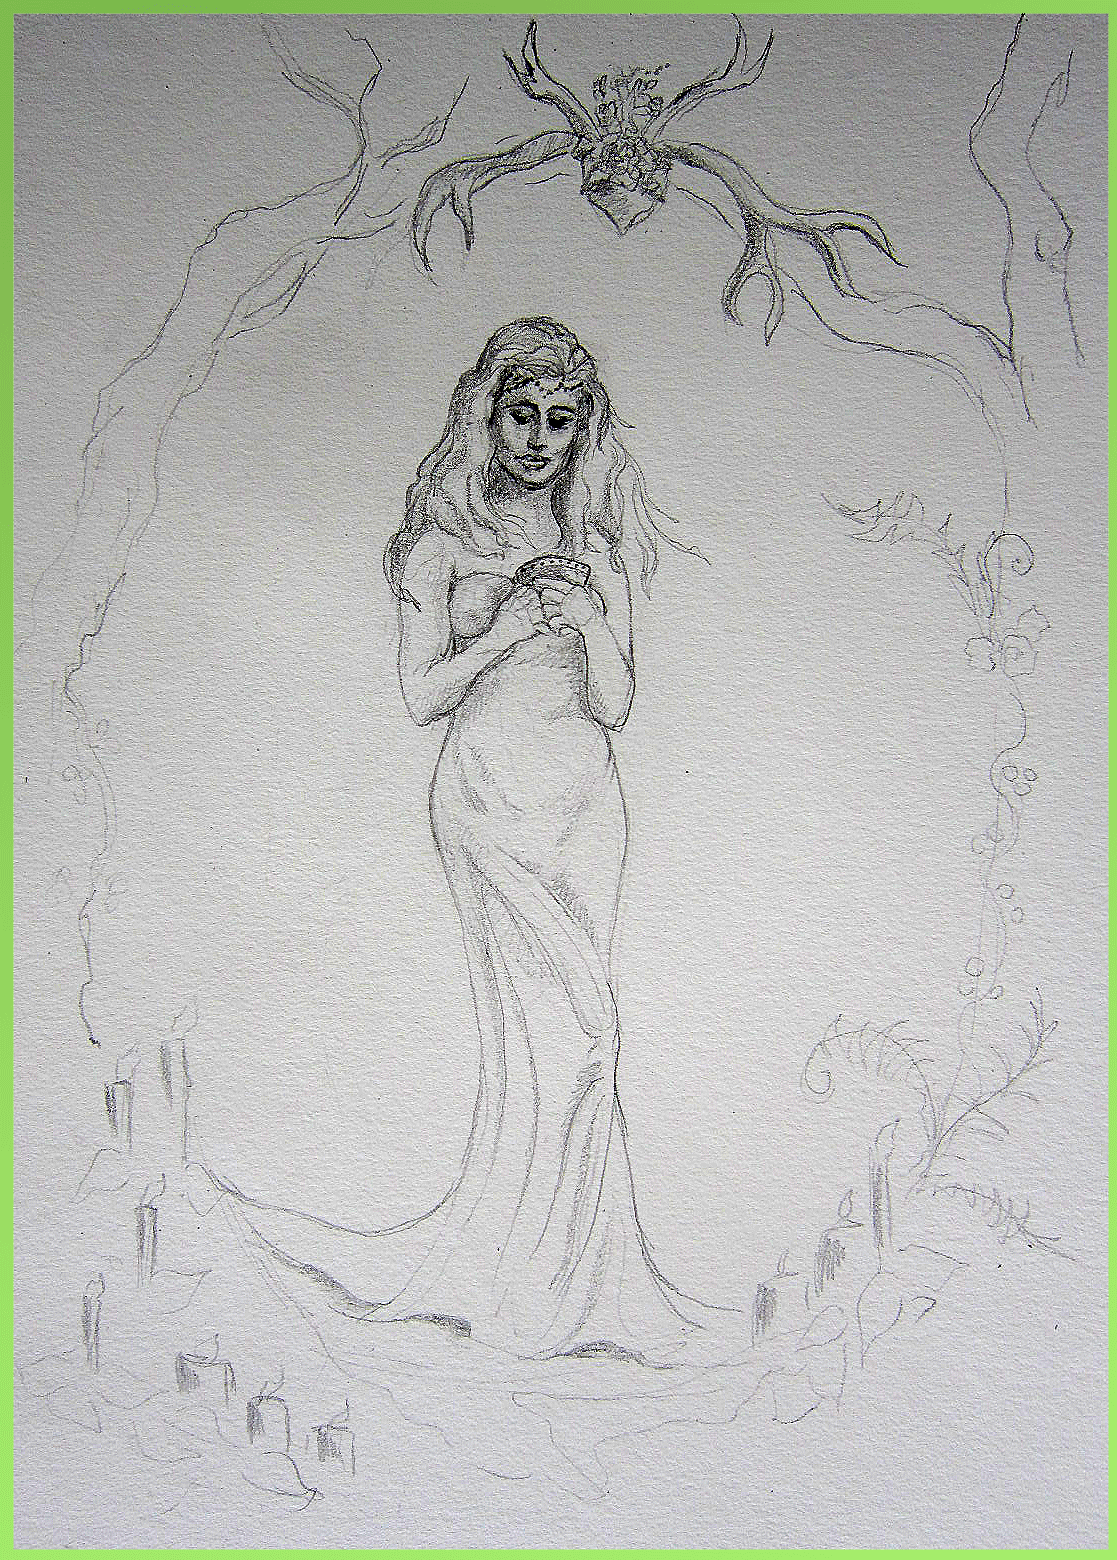 "Edgefield Bride", pencil sketch by Kerry McFall